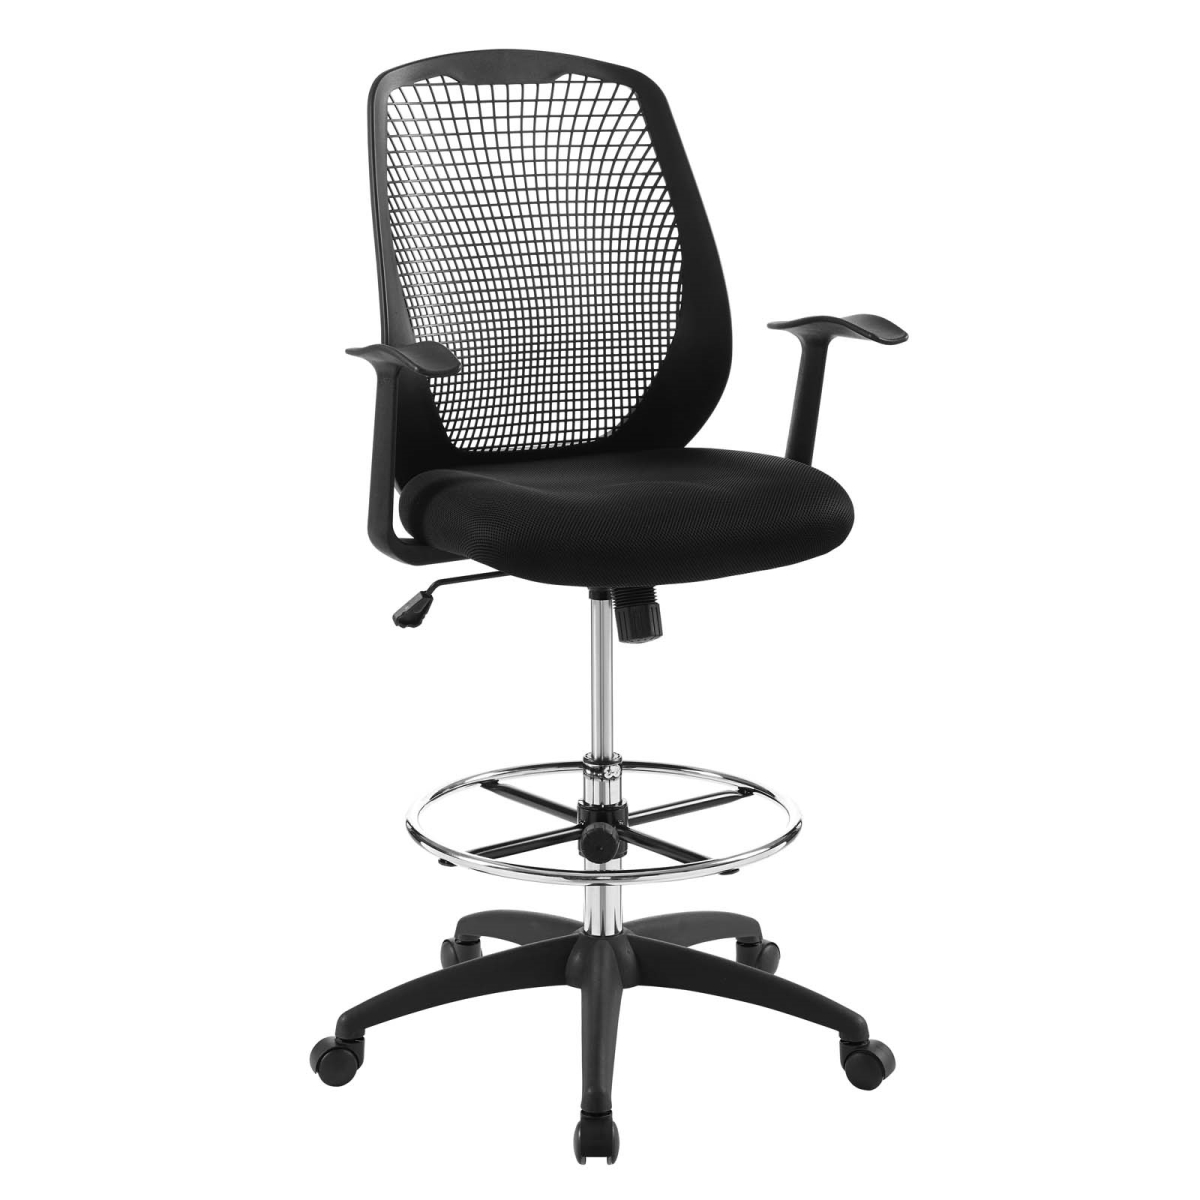 Eei-3194-blk Intrepid Mesh Drafting Chair - Black, 50 X 26 X 26 In.